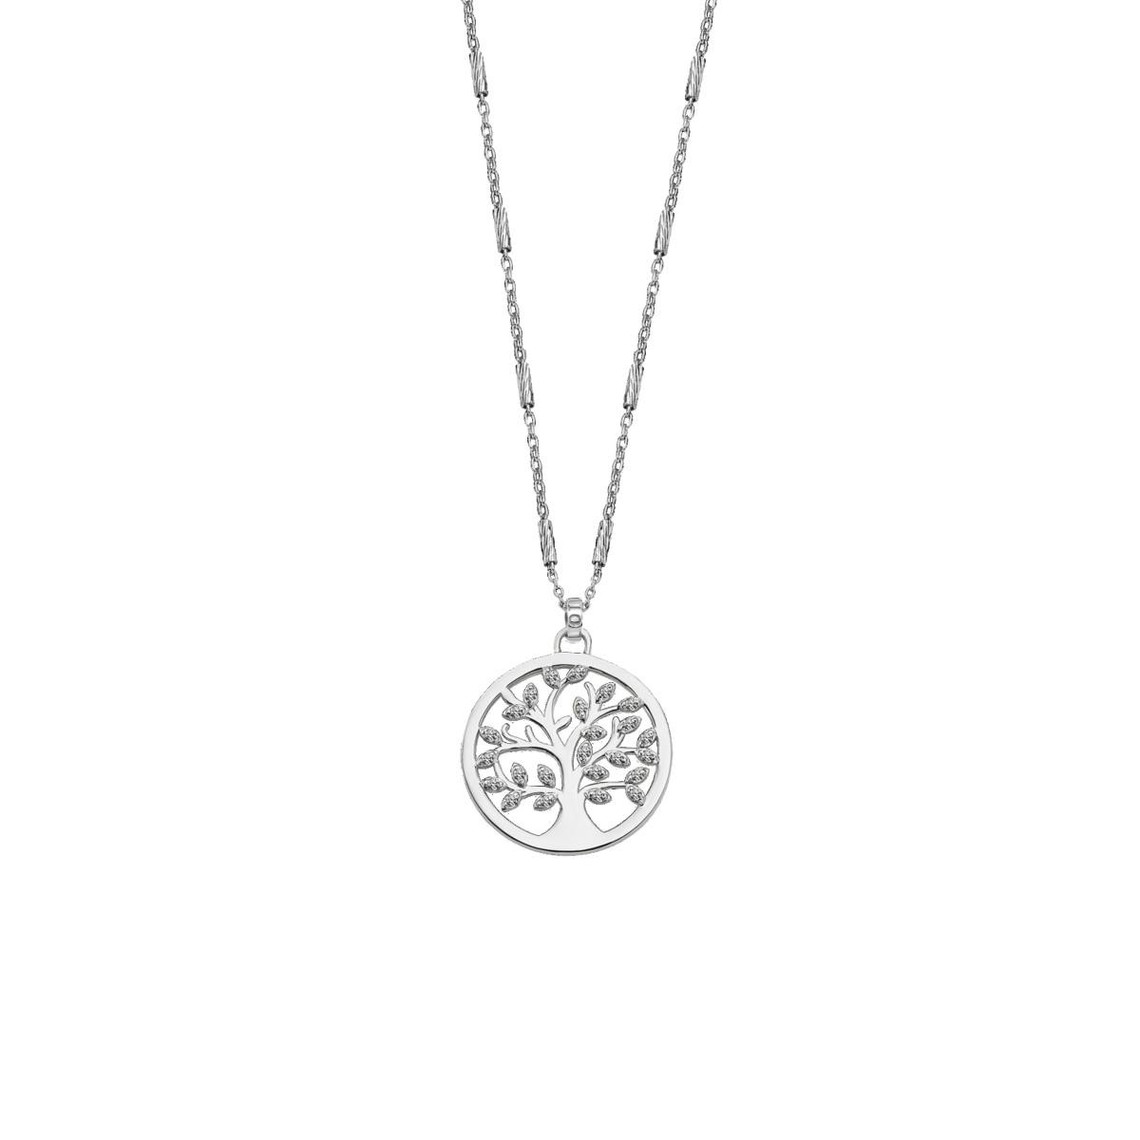 collier et pendentif lotus silver tree of life lp1892-1-1 - collier et pendentif tree of life argentlotus silver